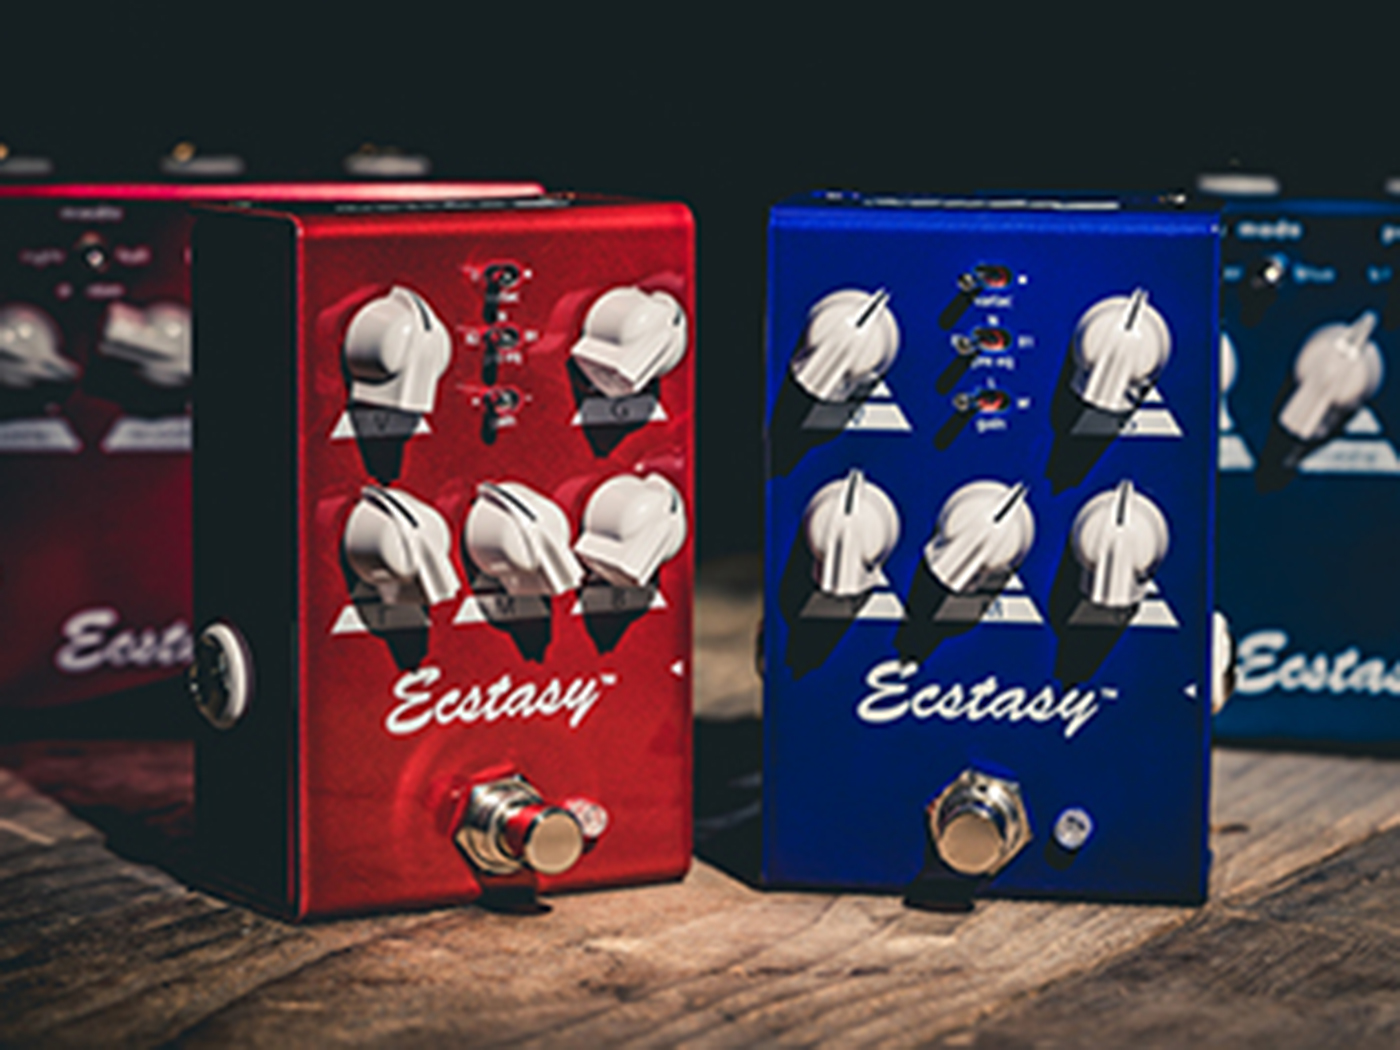 Bogner Amplification releases the Ecstasy Blue Mini, Red Mini